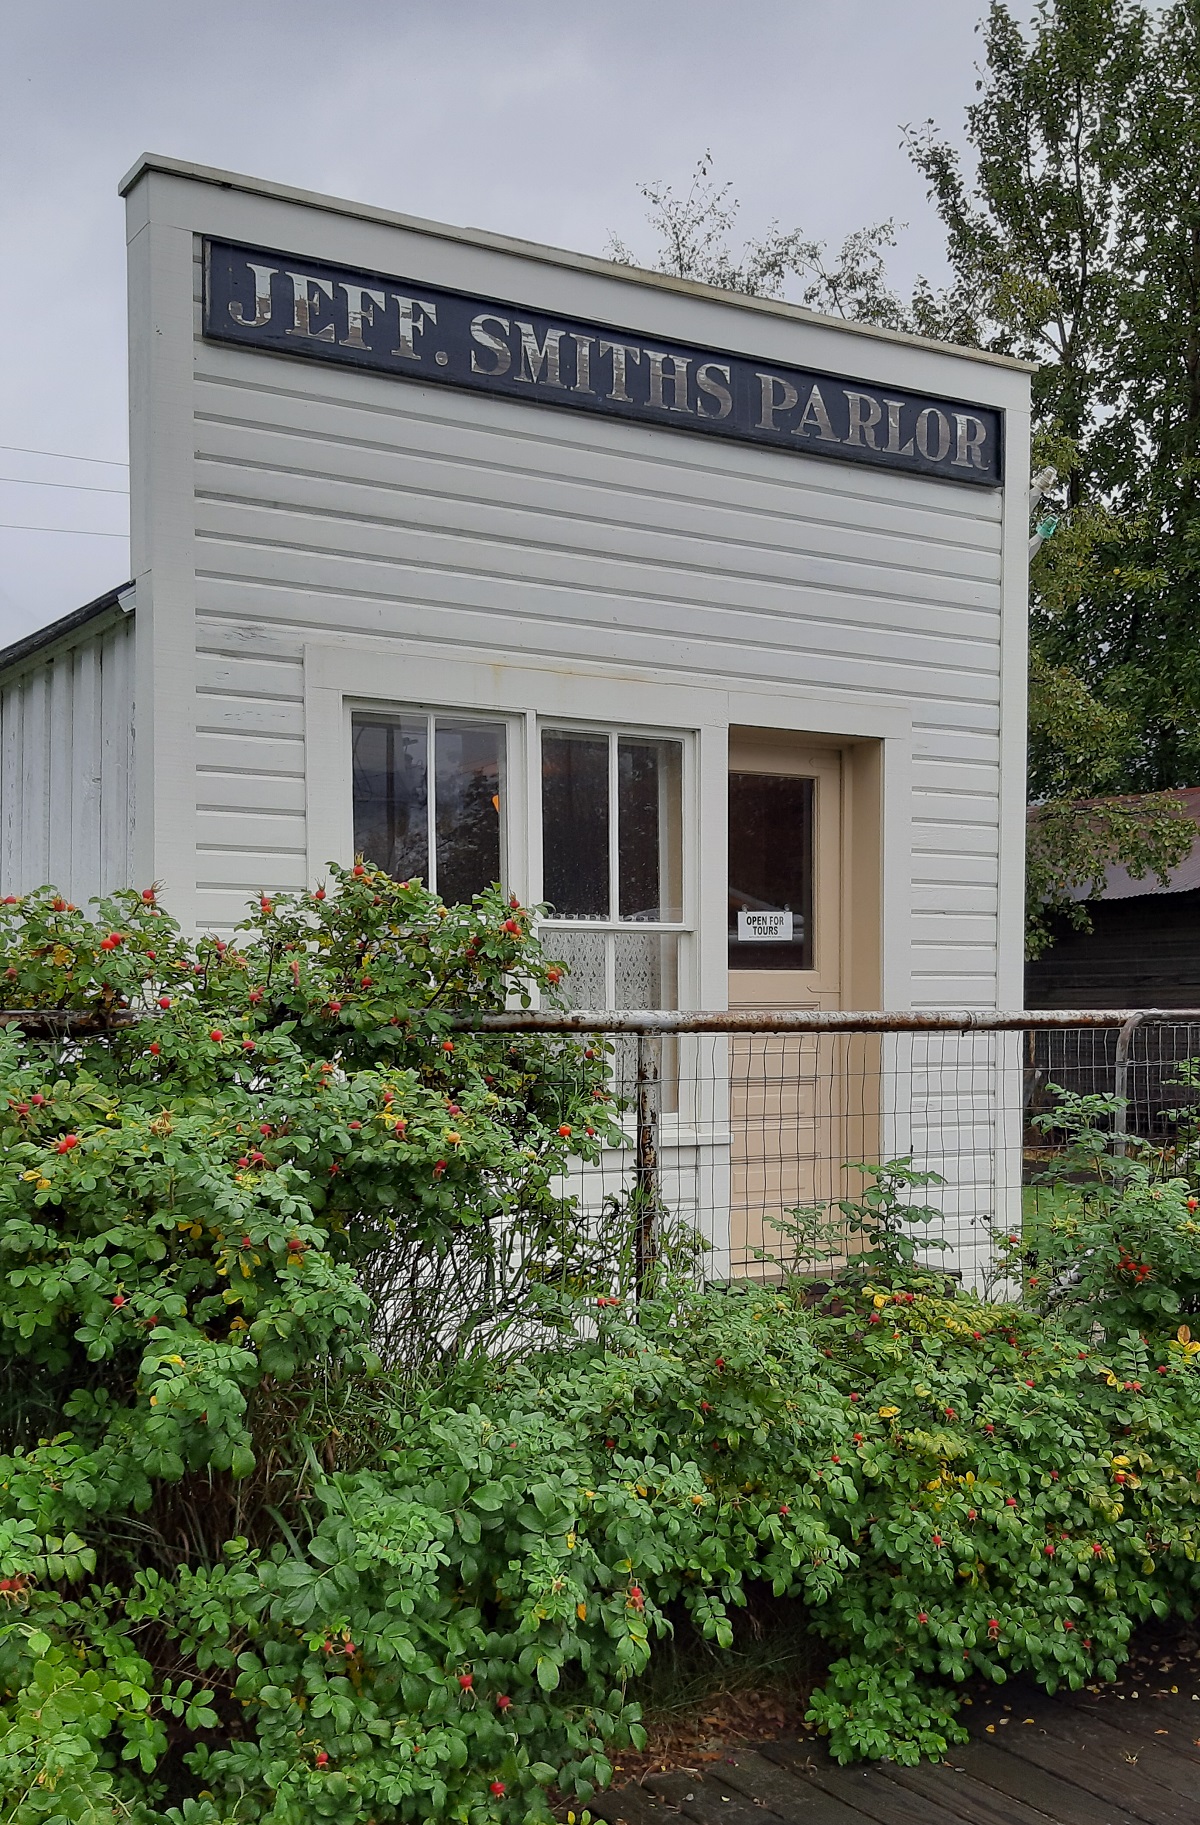 Jeff Smith's Parlor, Skagway